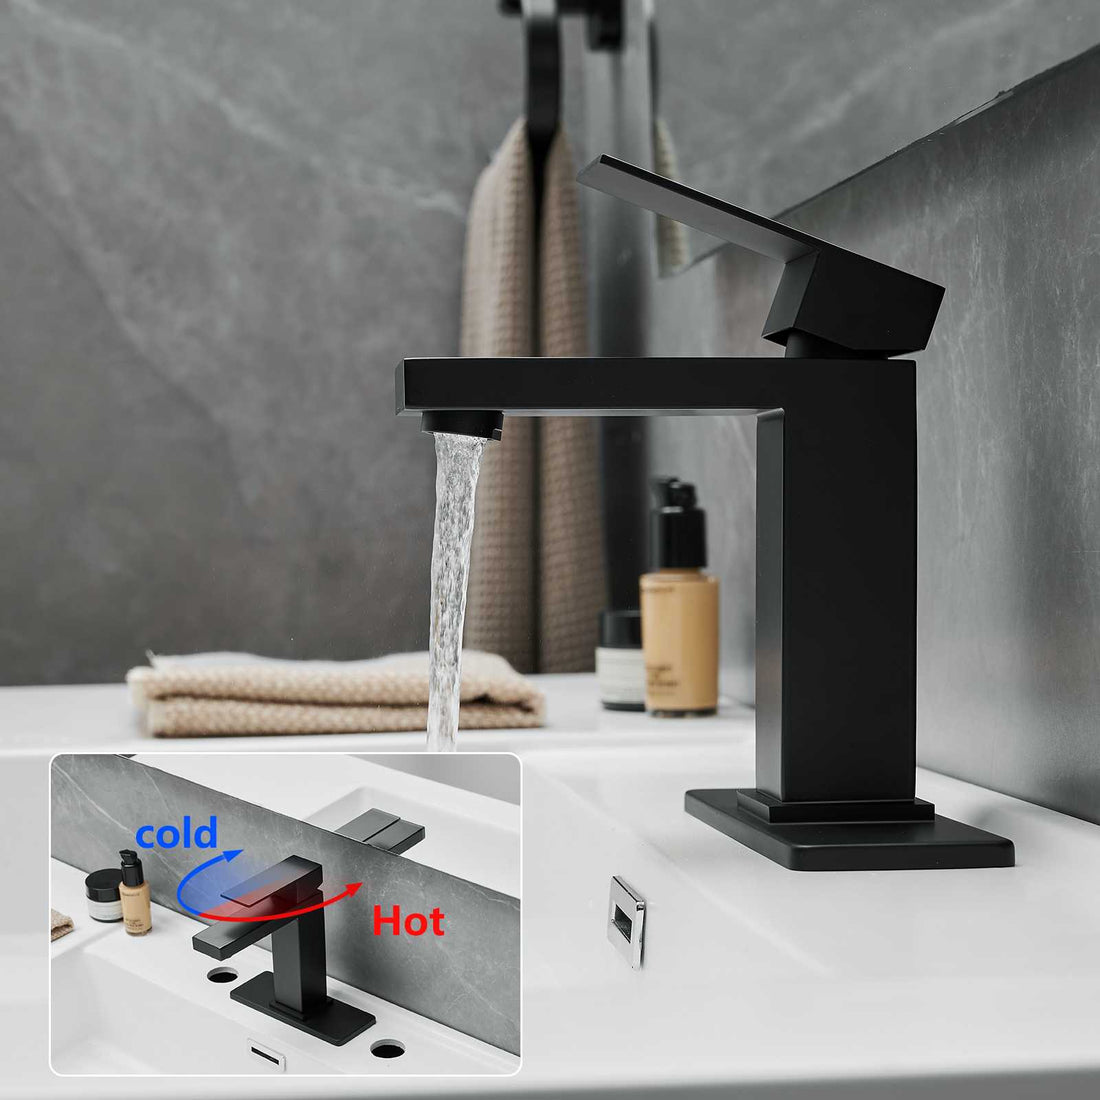 Black Deck Plate Pop Up Drain Single Handle Waterfall Bathroom Faucet